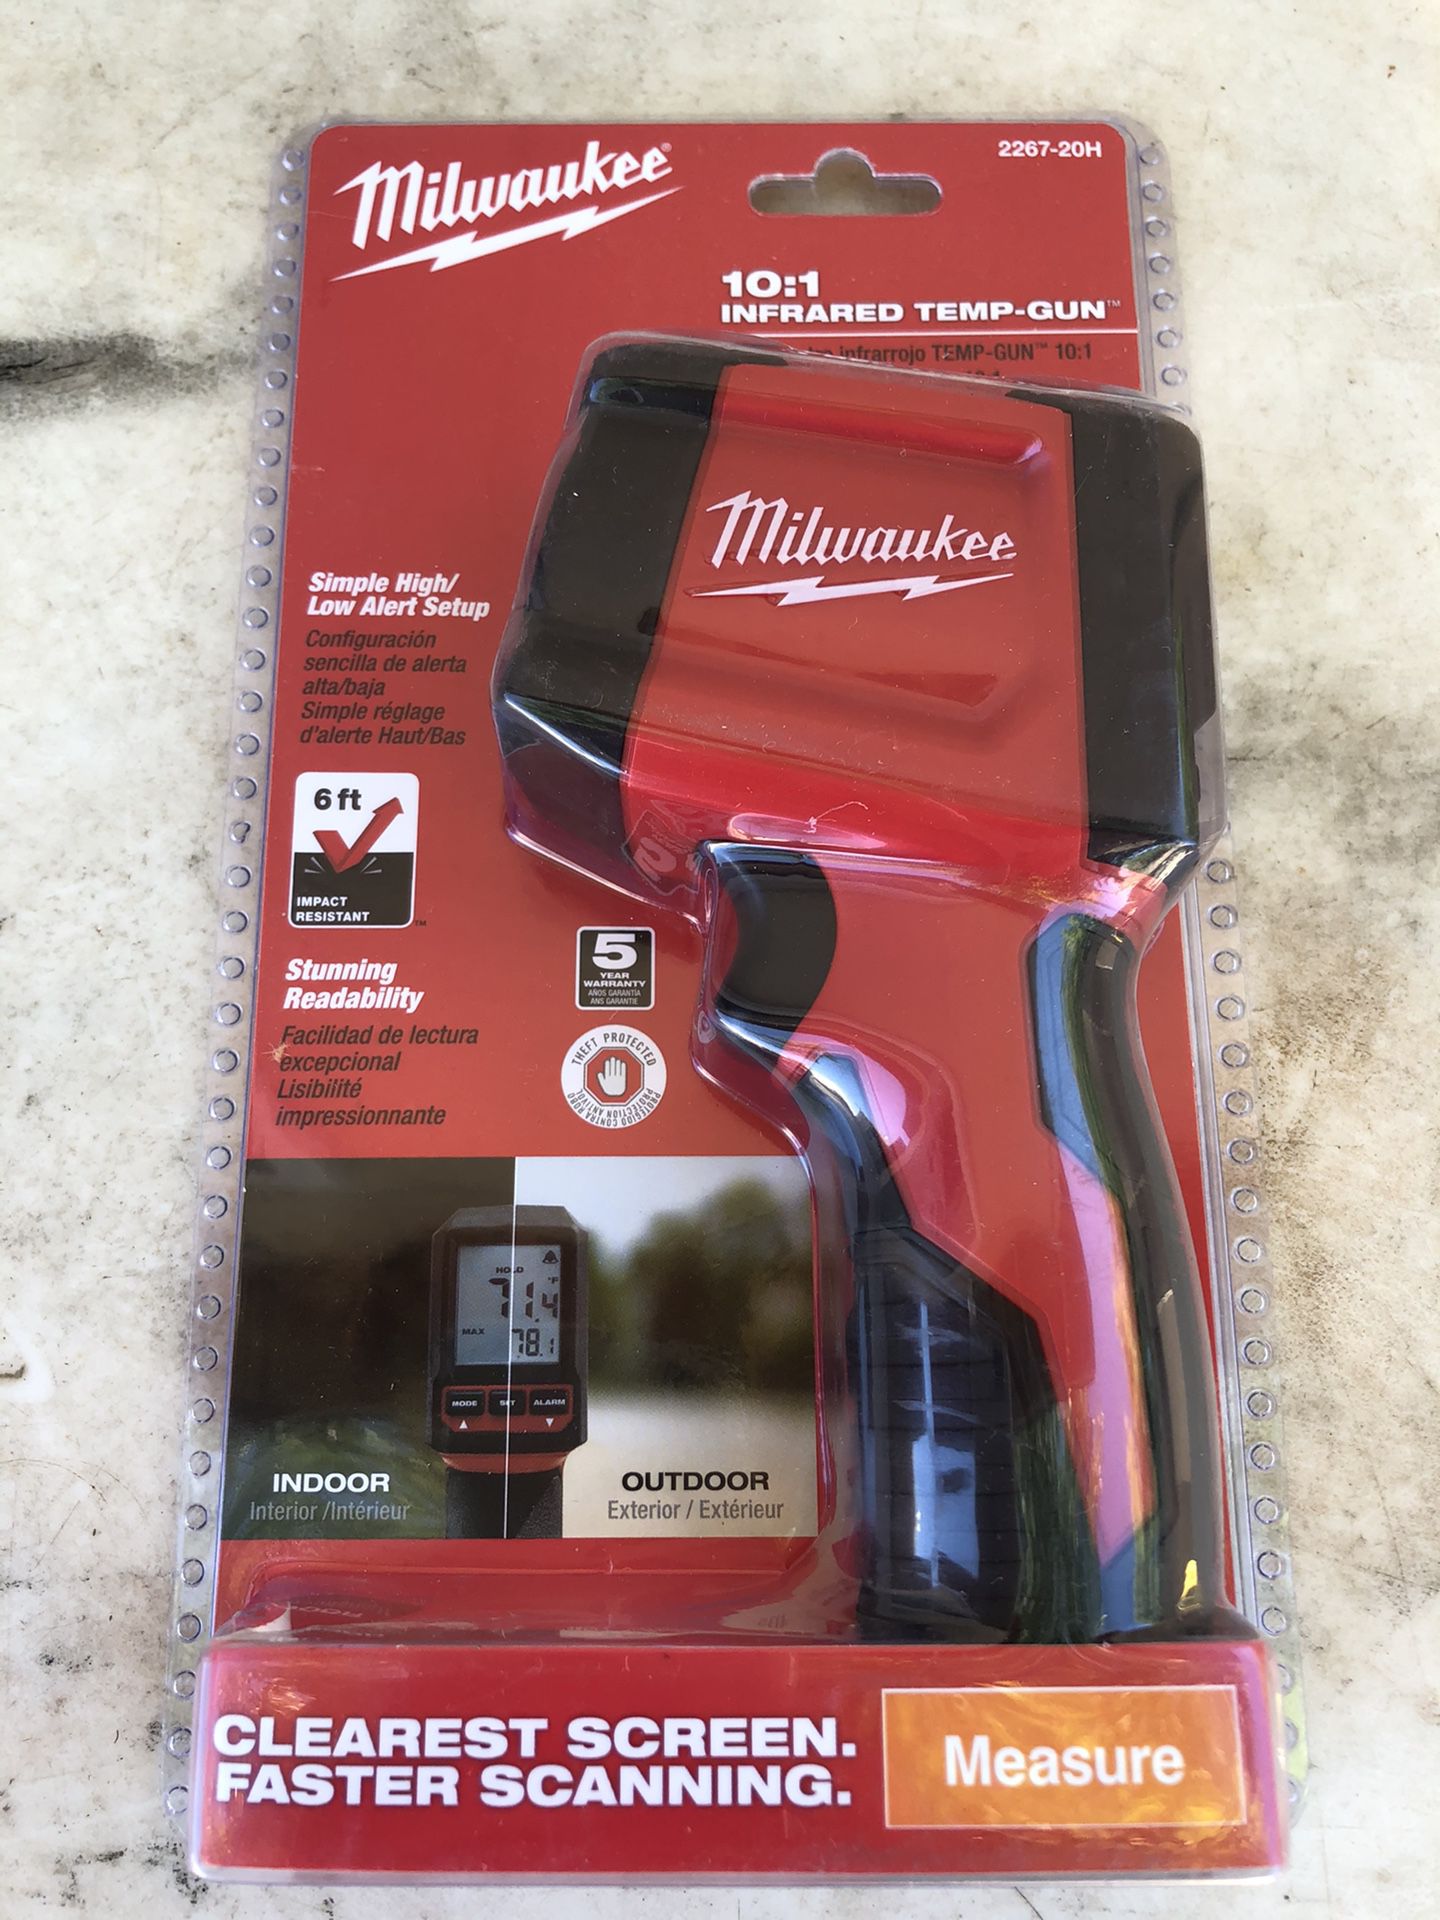 Milwaukee 10:1 infrared temp gun brand new